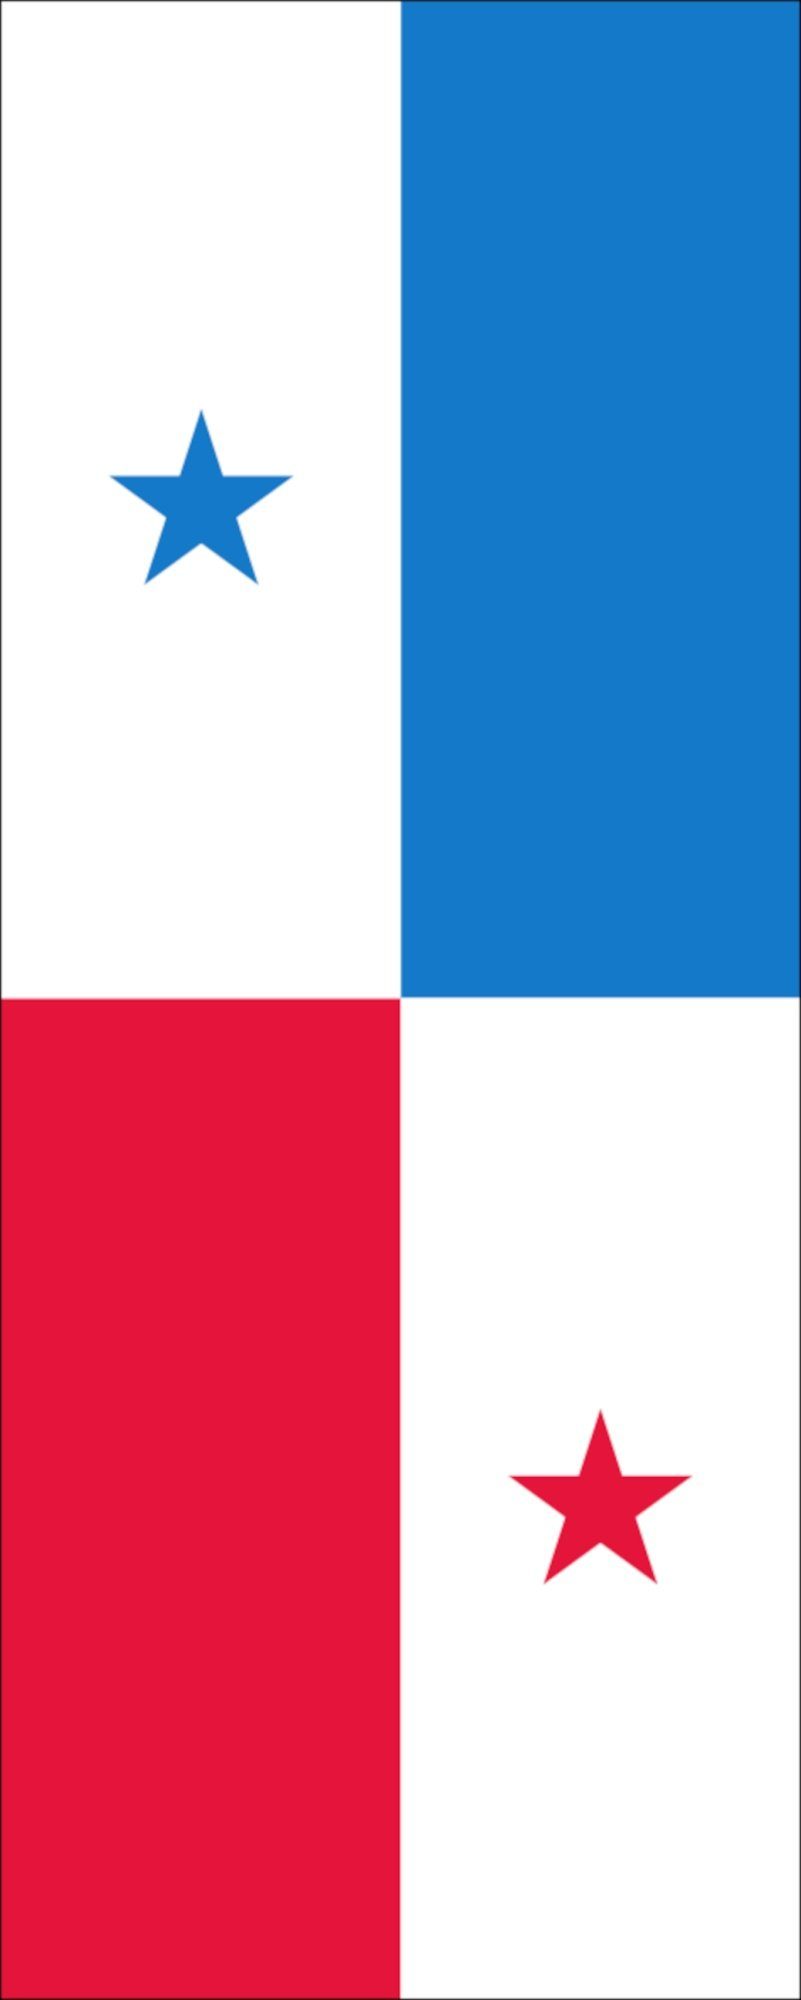 Panama flaggenmeer Flagge g/m² 110 Hochformat Flagge